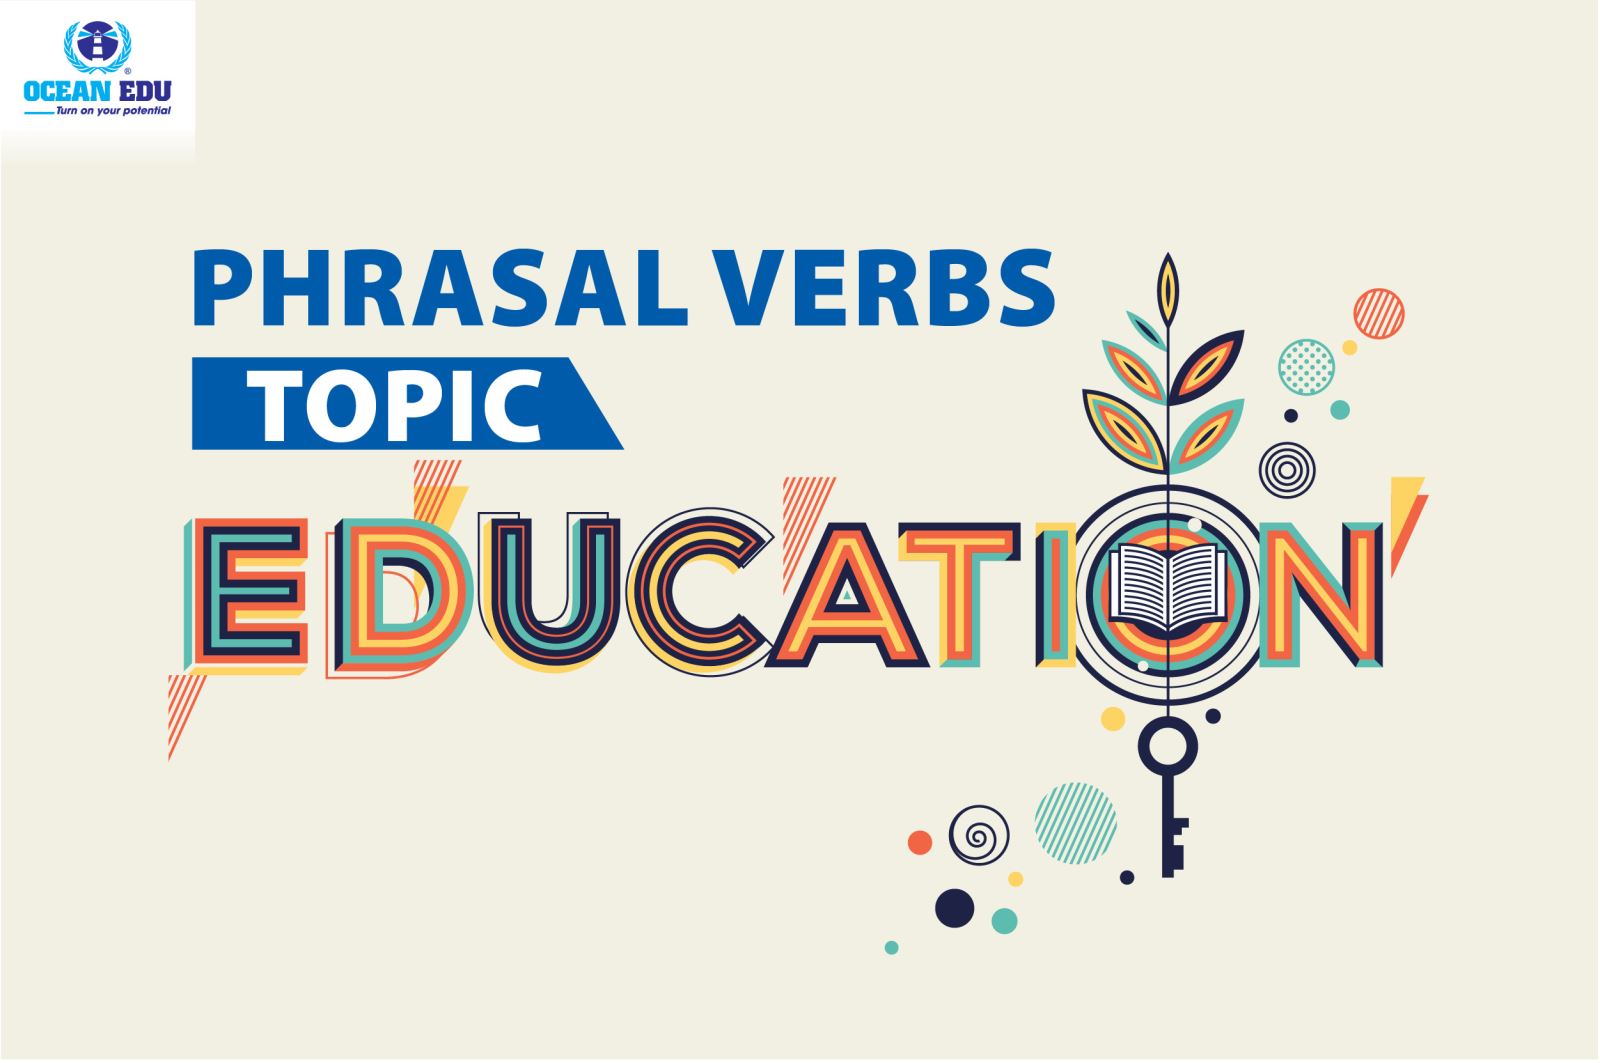 Phrasal verbs topic Education